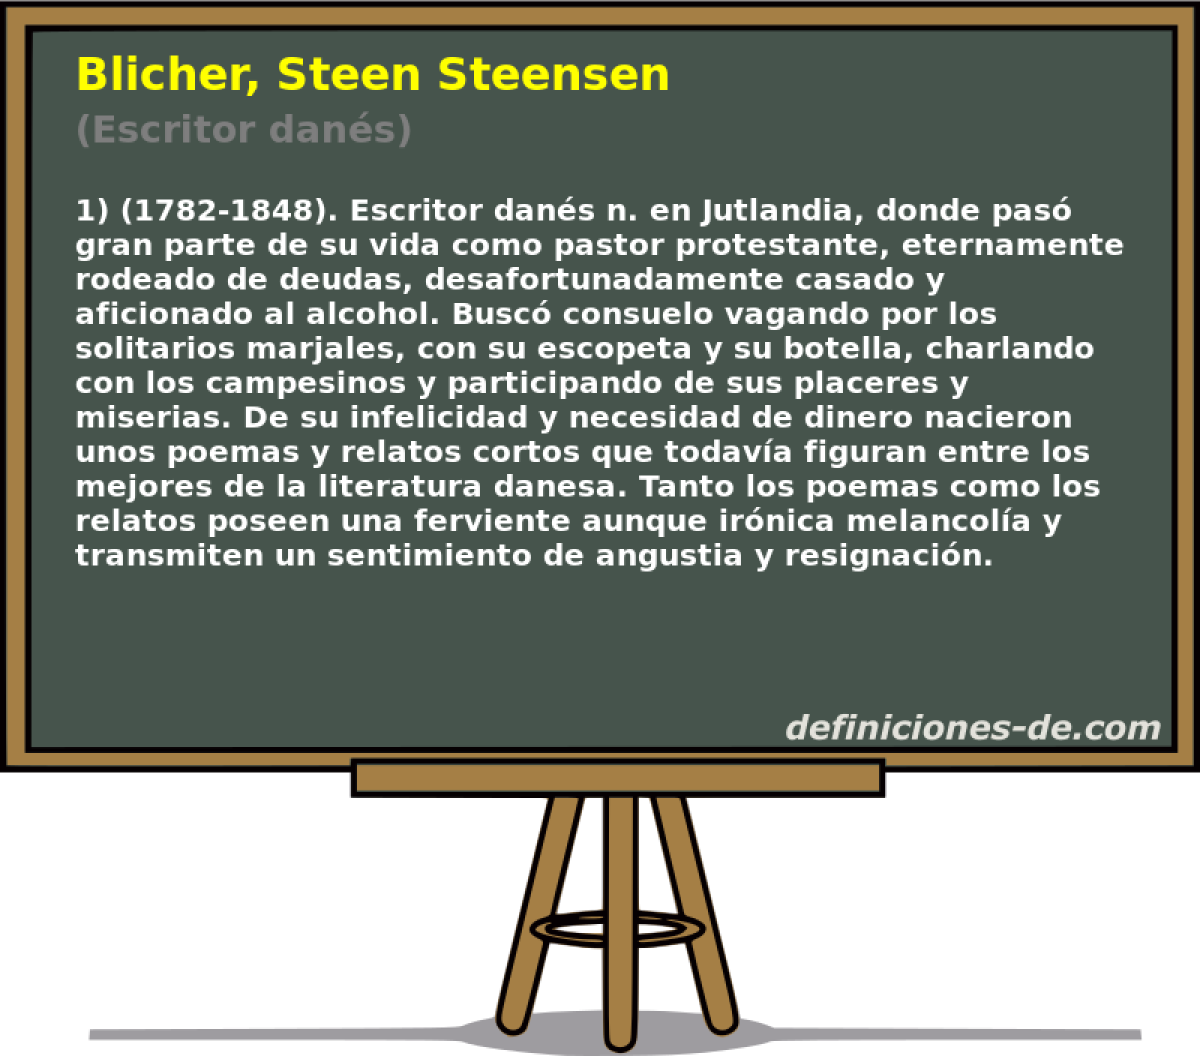 Blicher, Steen Steensen (Escritor dans)